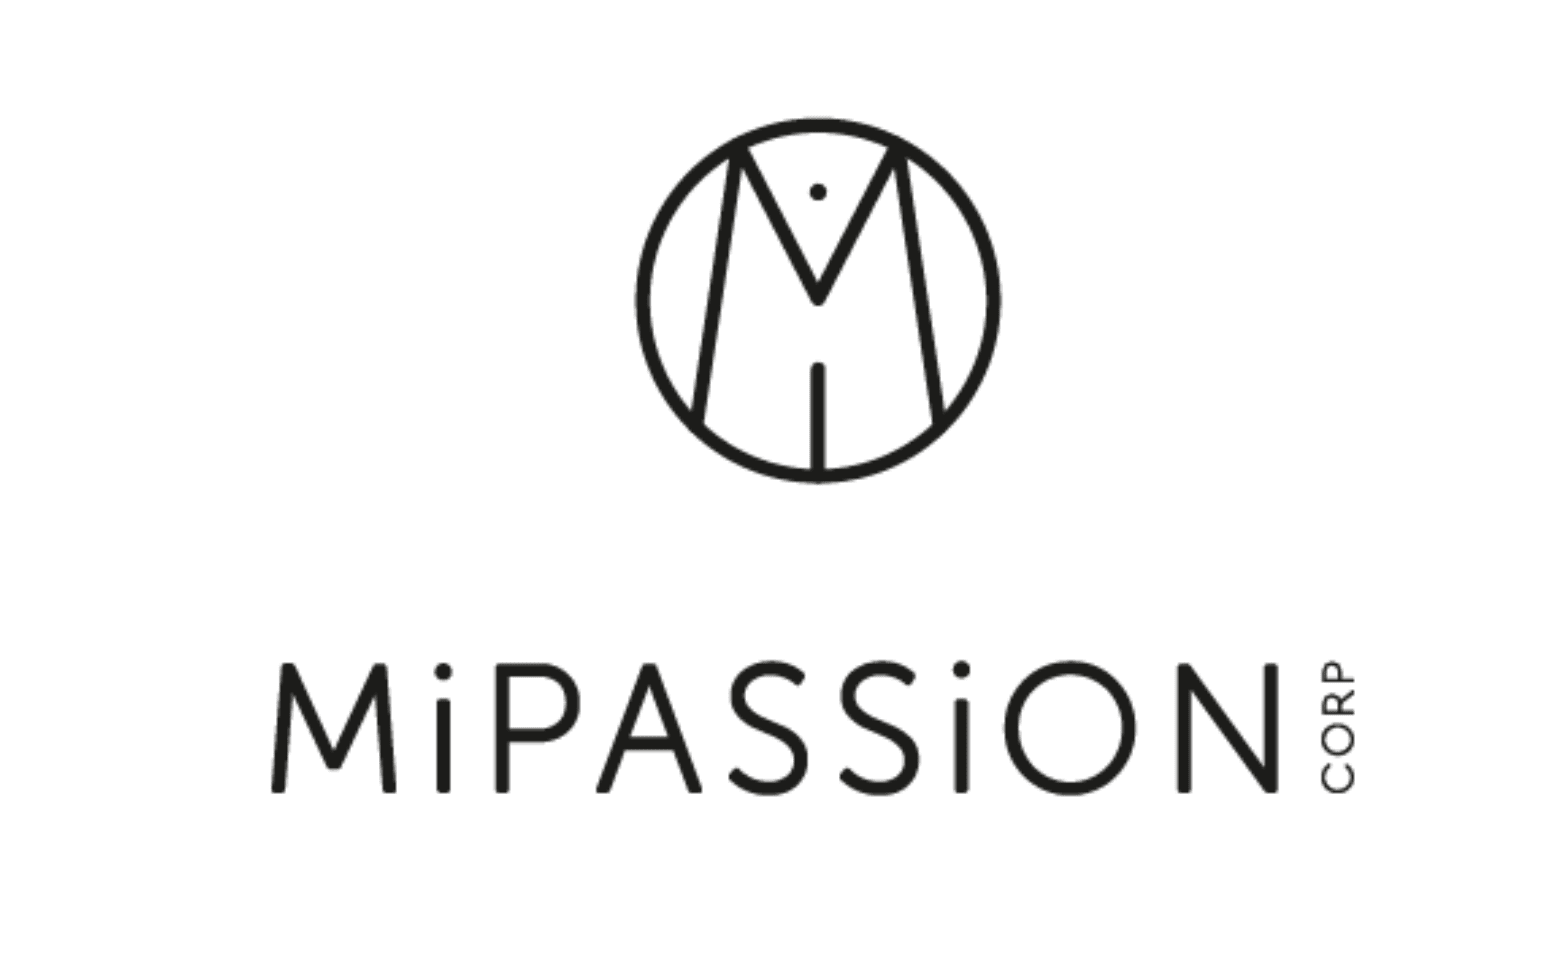 Mipassion